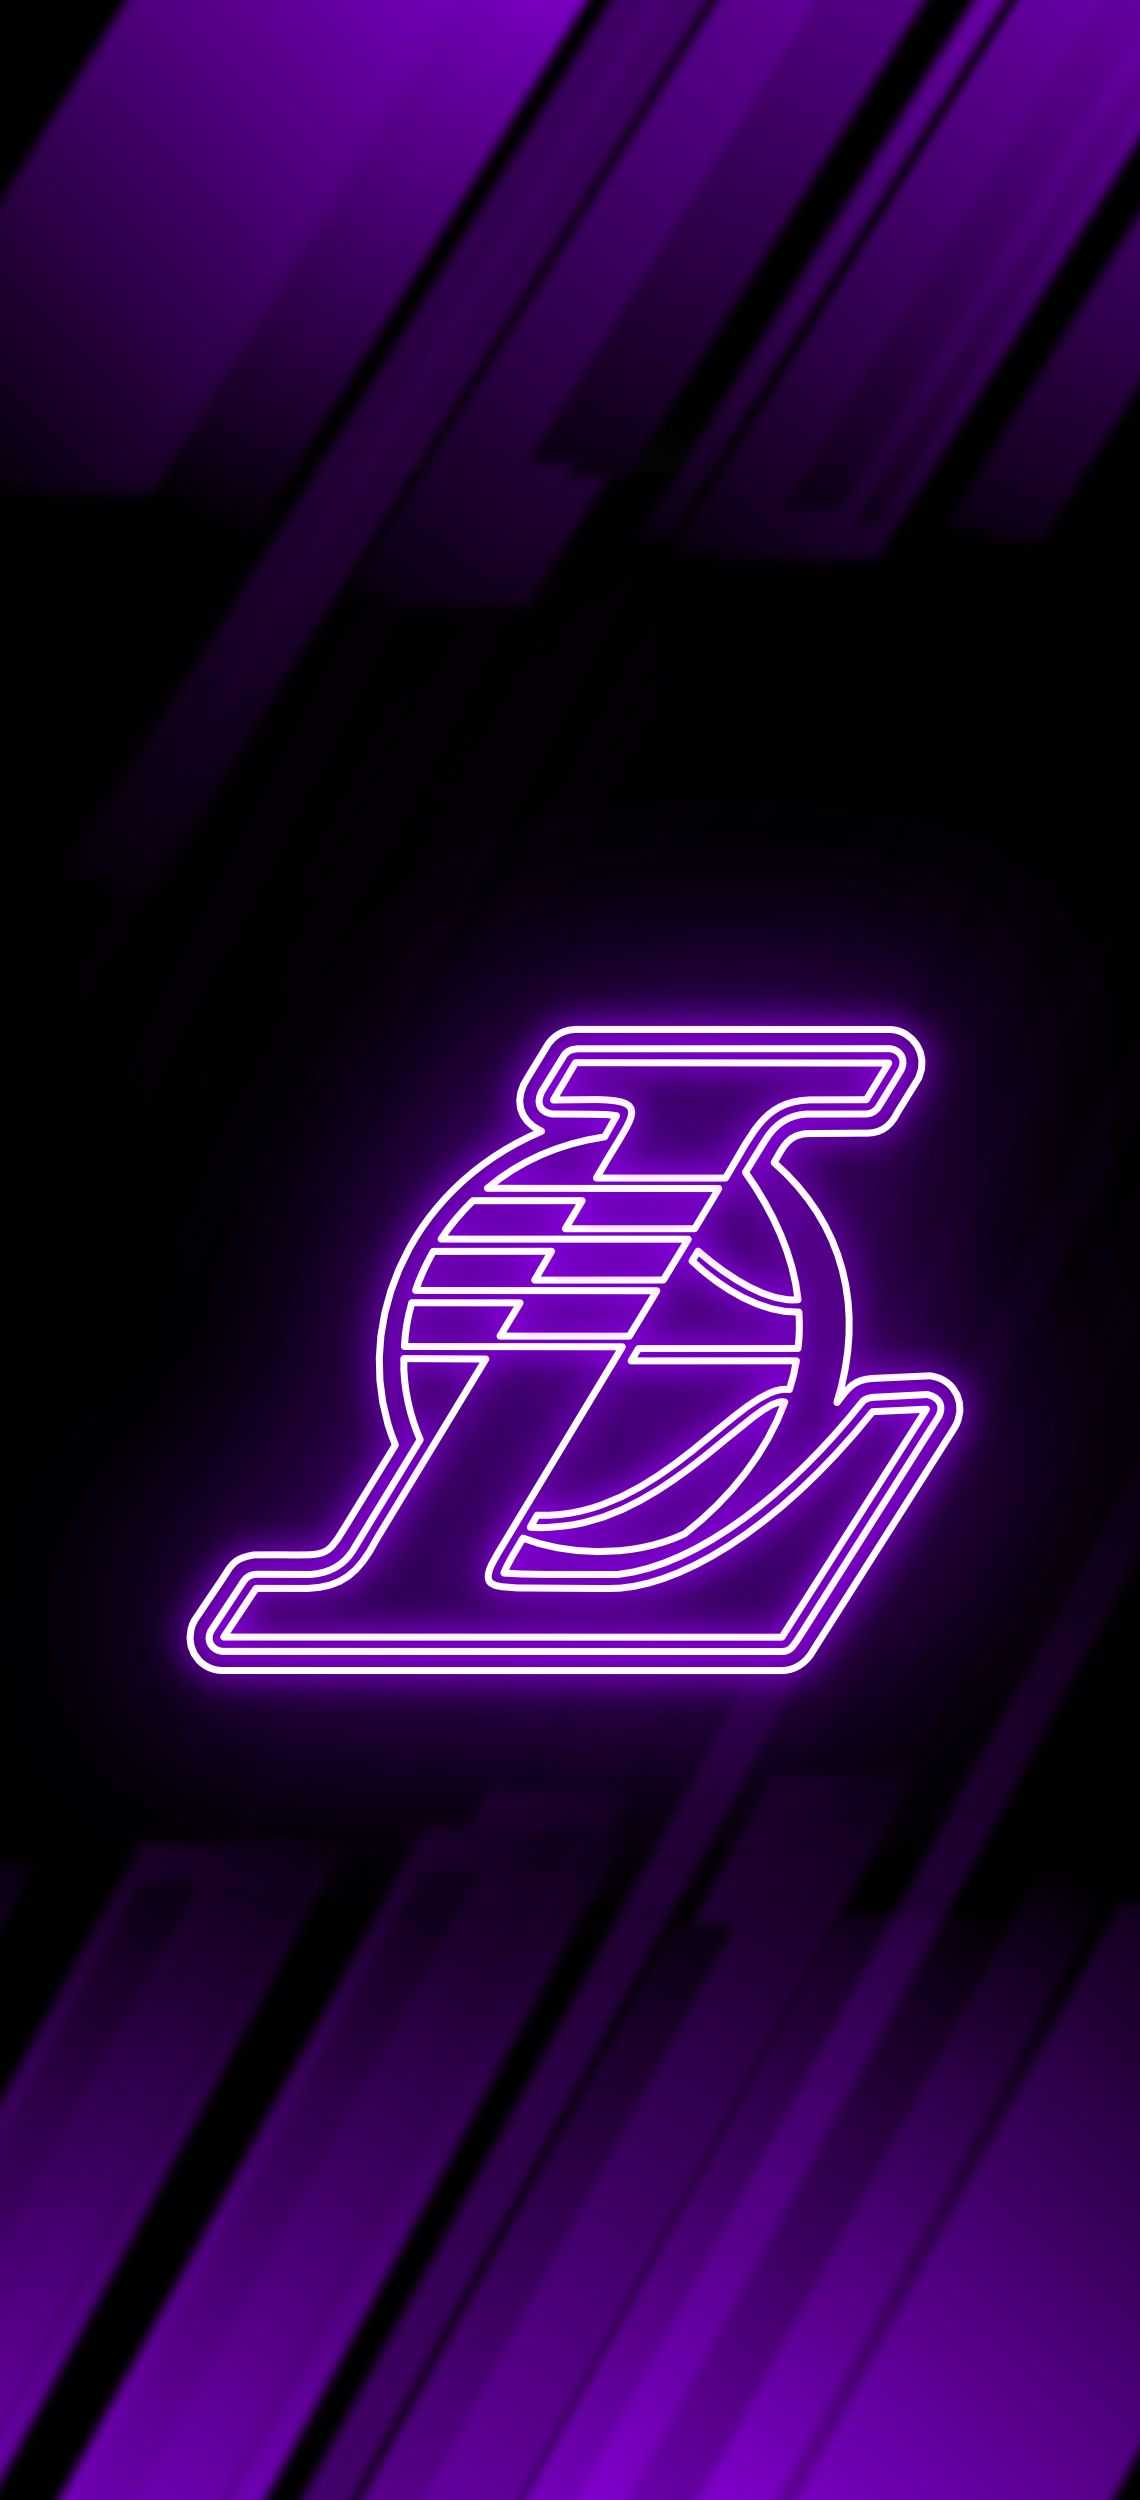 Баскетбольная команда Lakers логотип